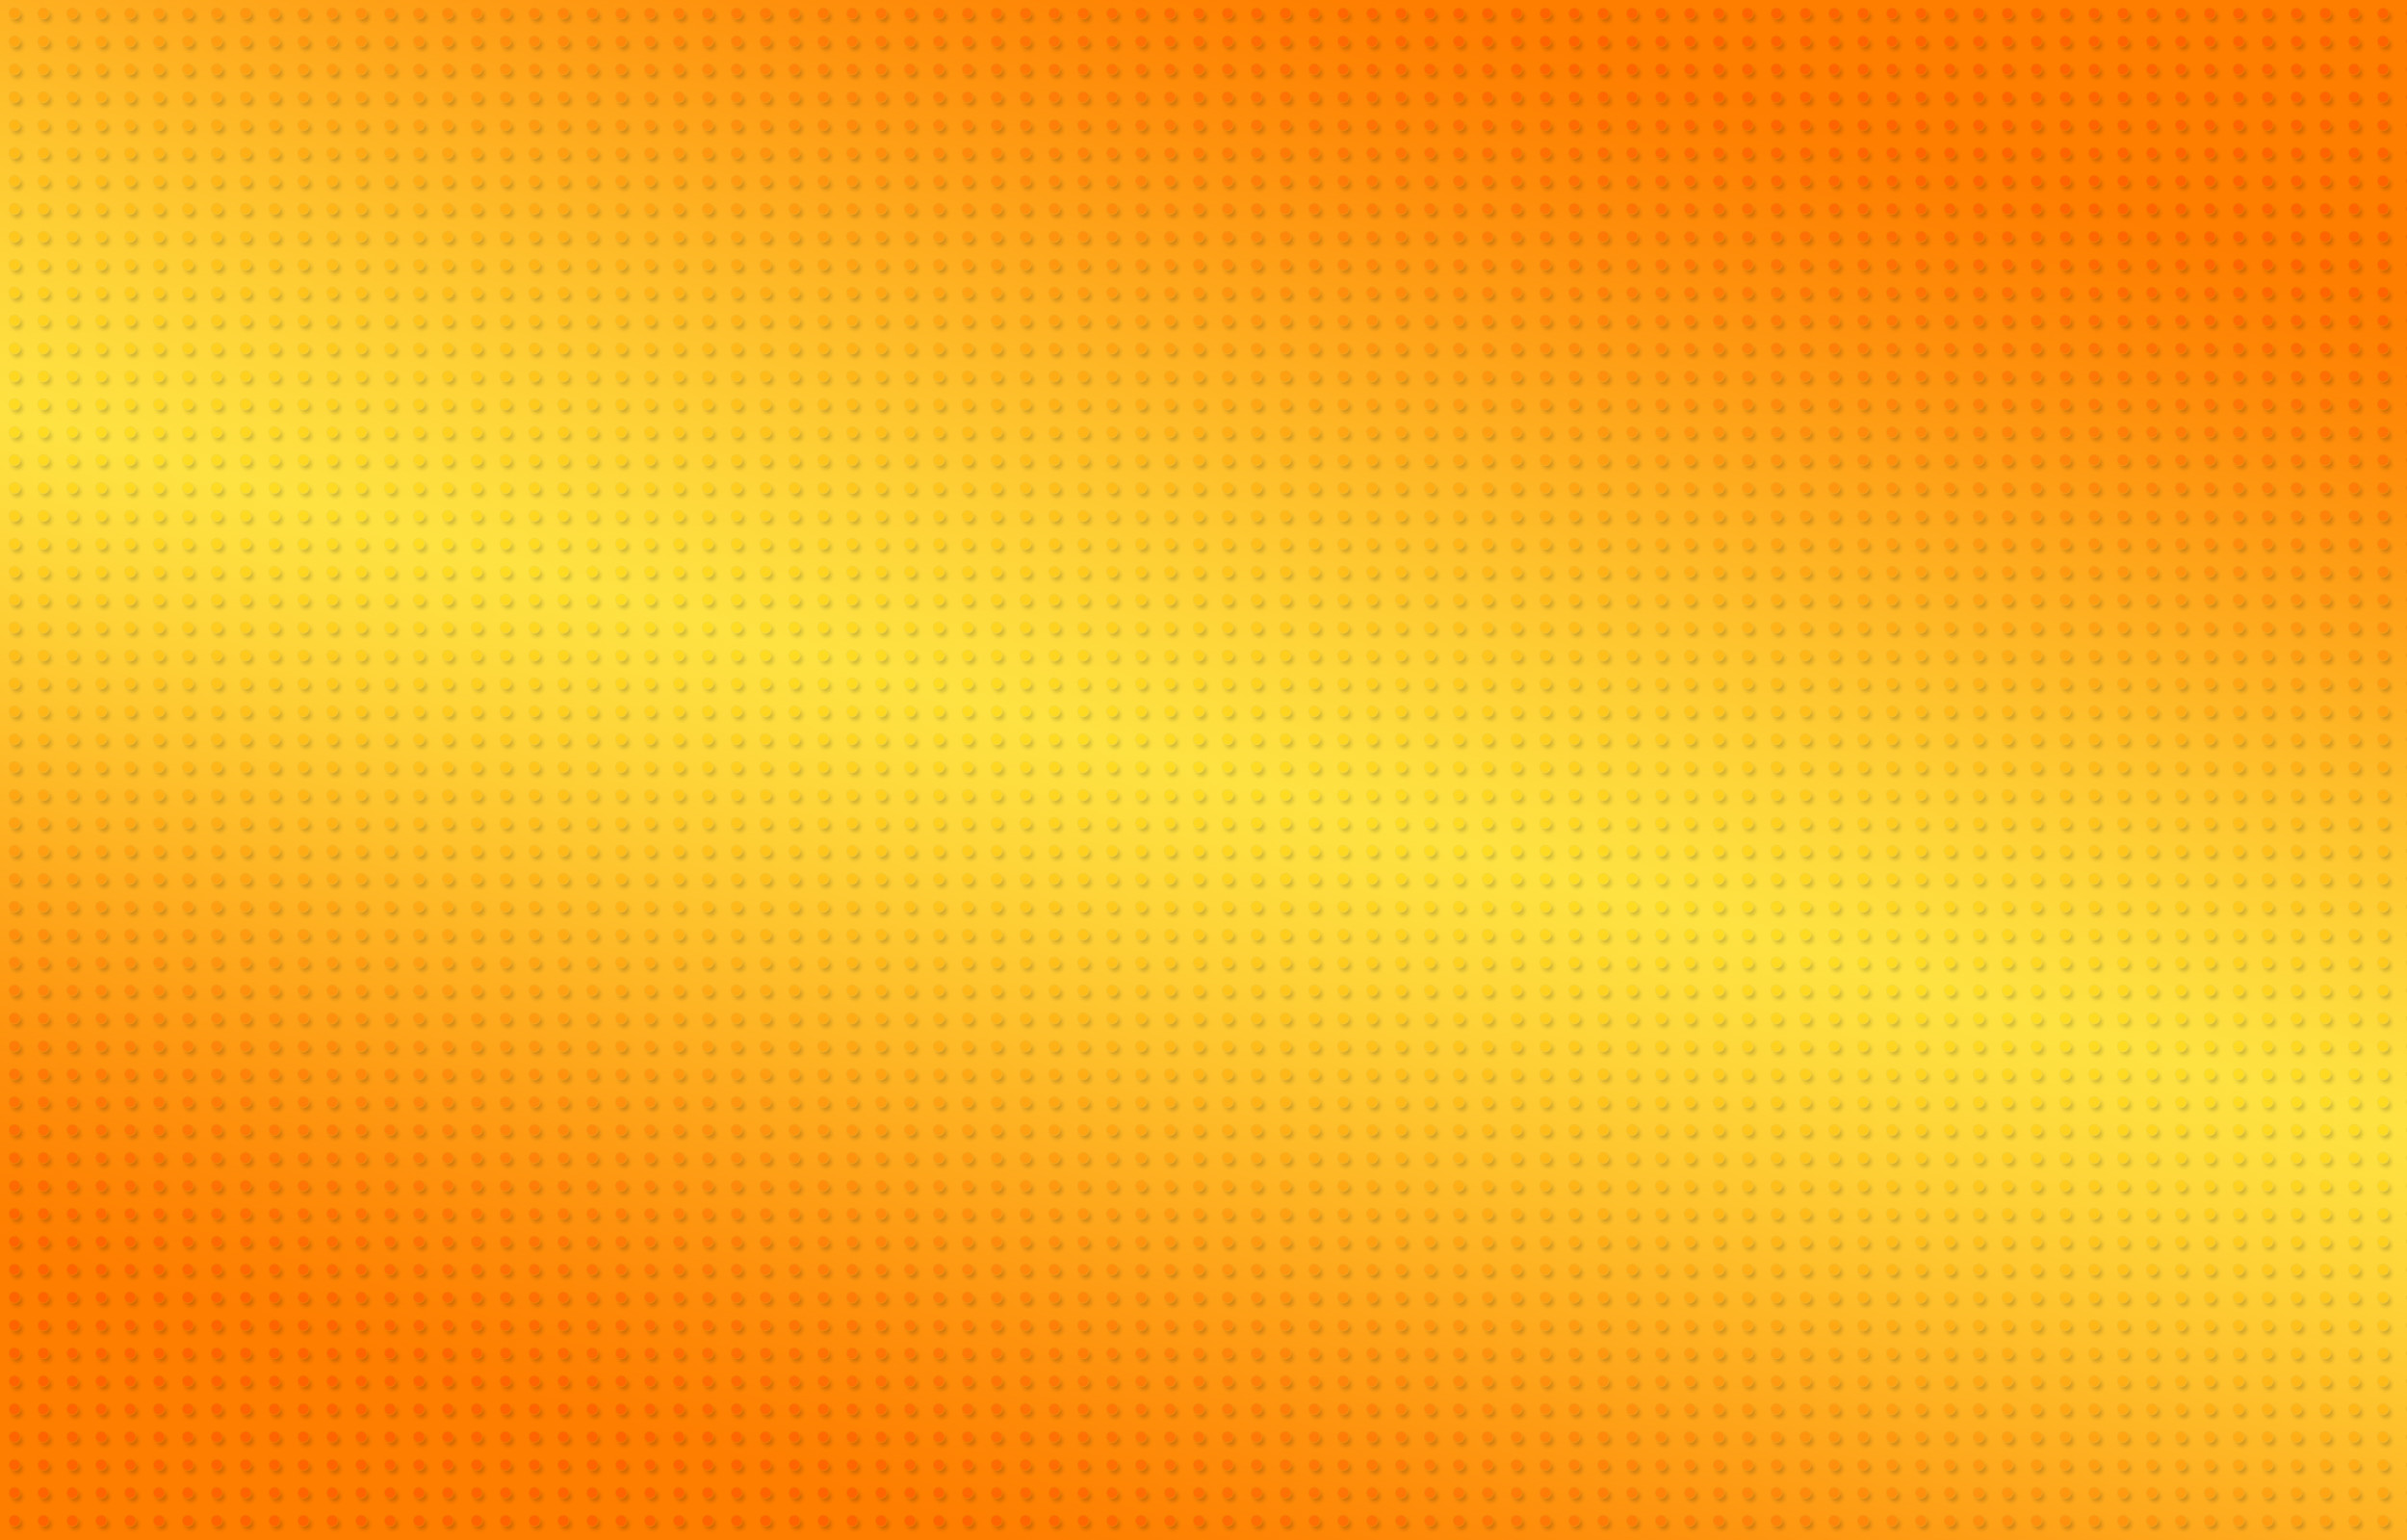 Orange Background Images (51+ pictures)